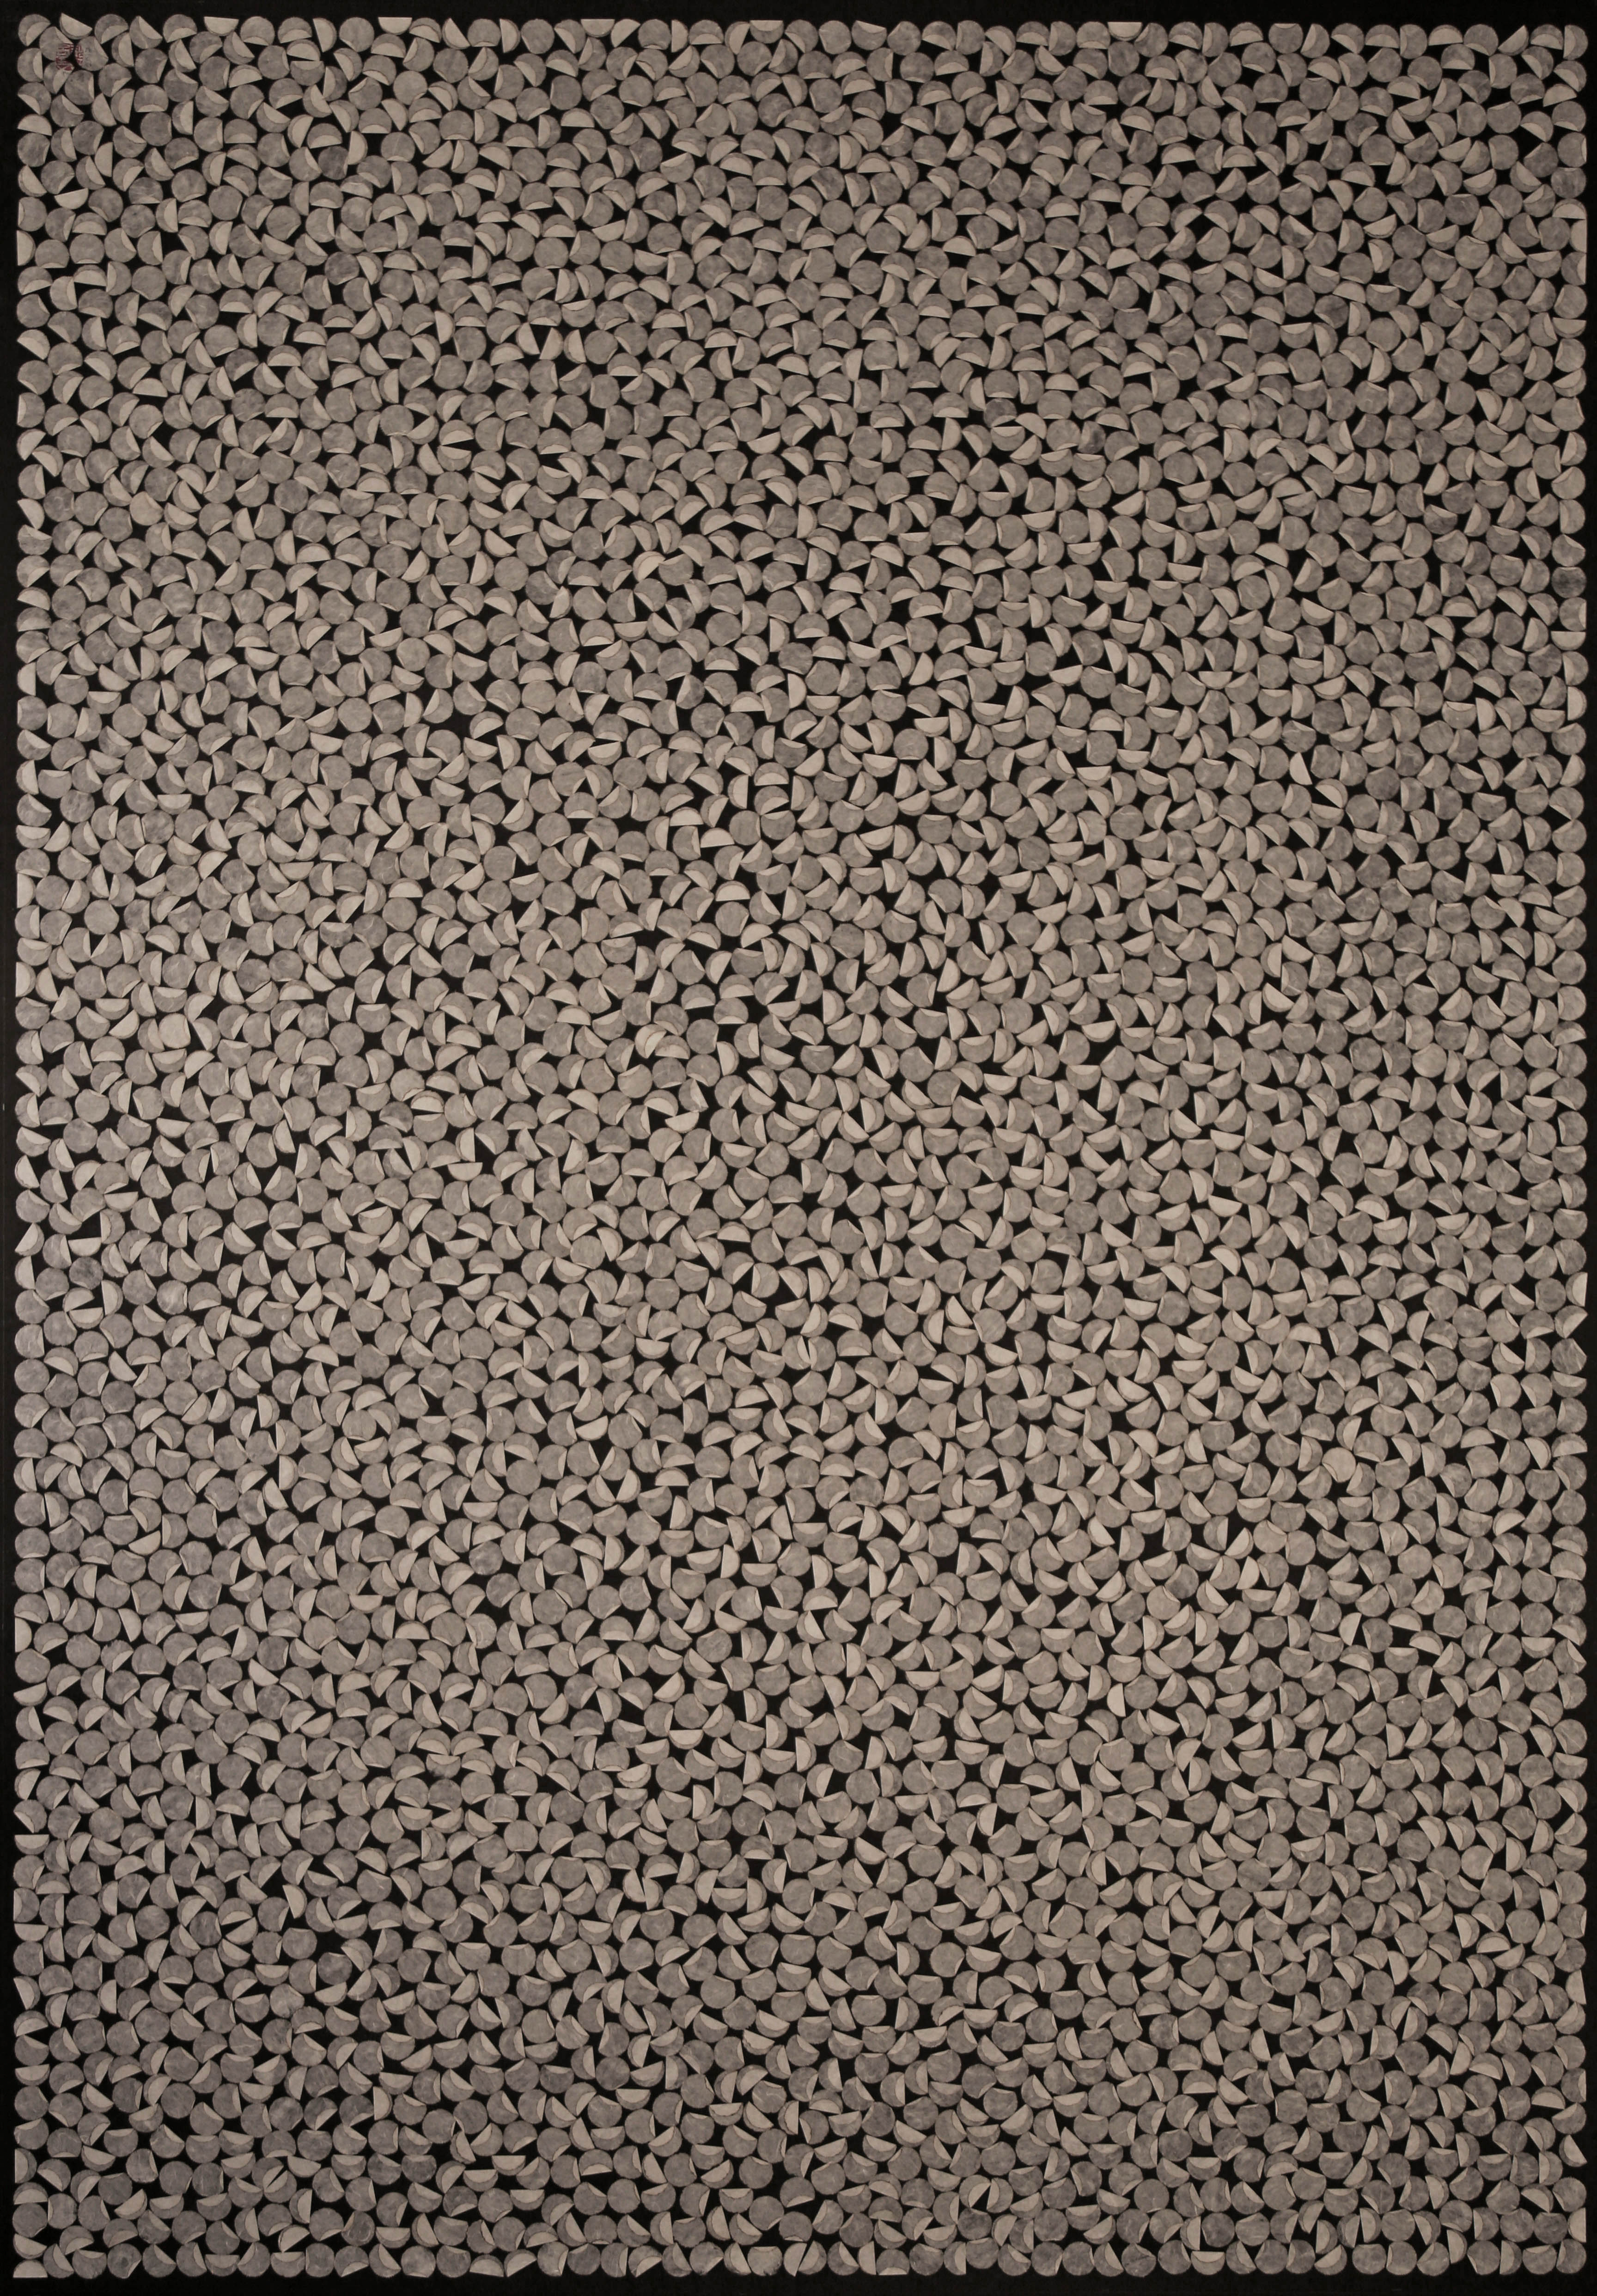 Minjung Kim - Order Impulse (17-094), 2017, mixed media on mulberry Hanji paper, 200.5 x 139.5 cm